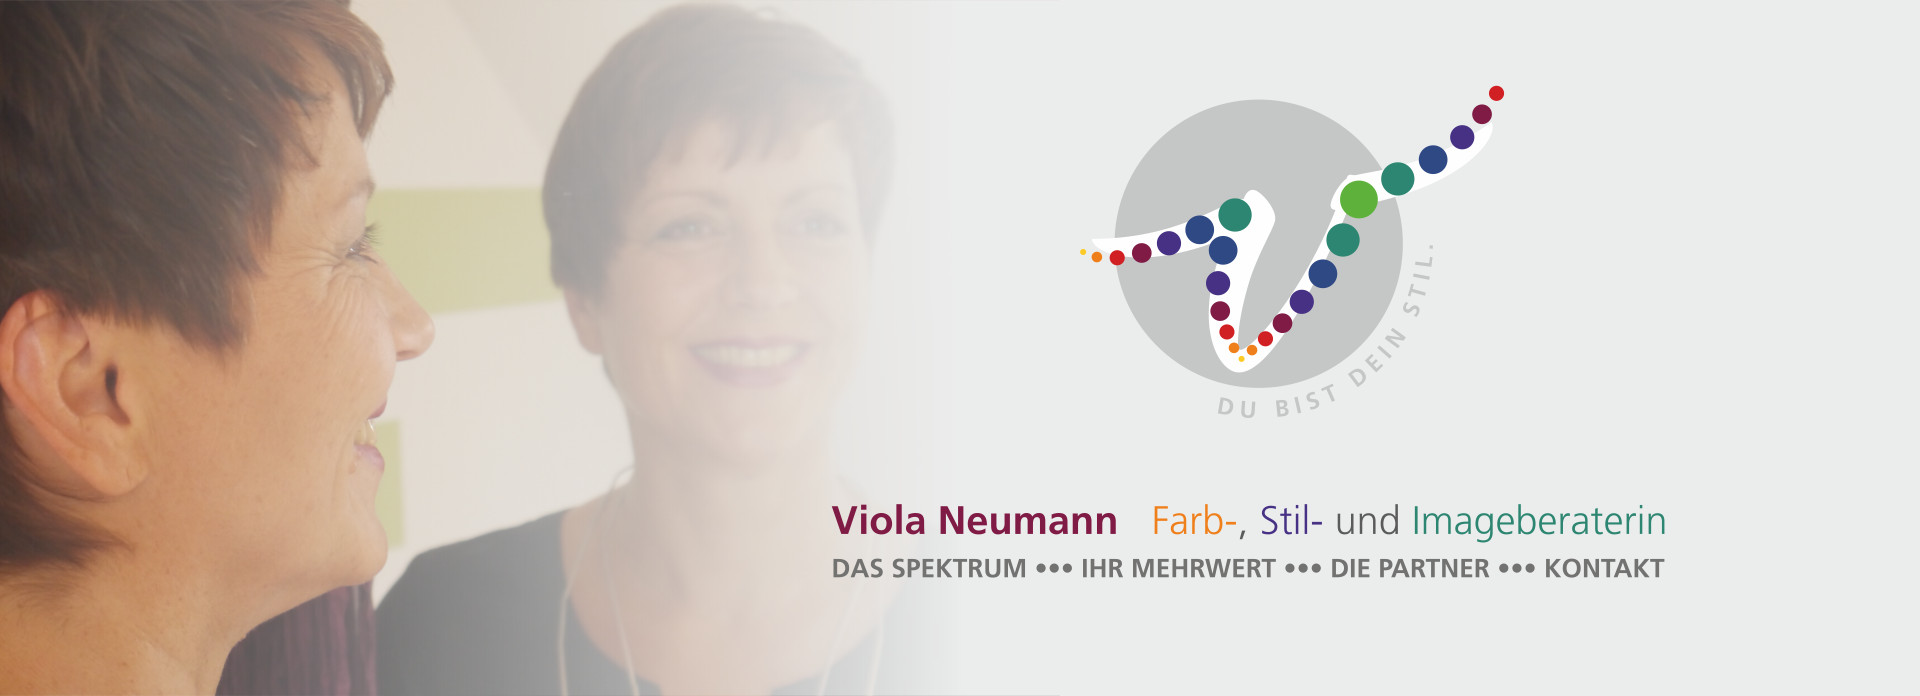 Viola Neumann - Farbberaterin, Stilberaterin, Imageberaterin